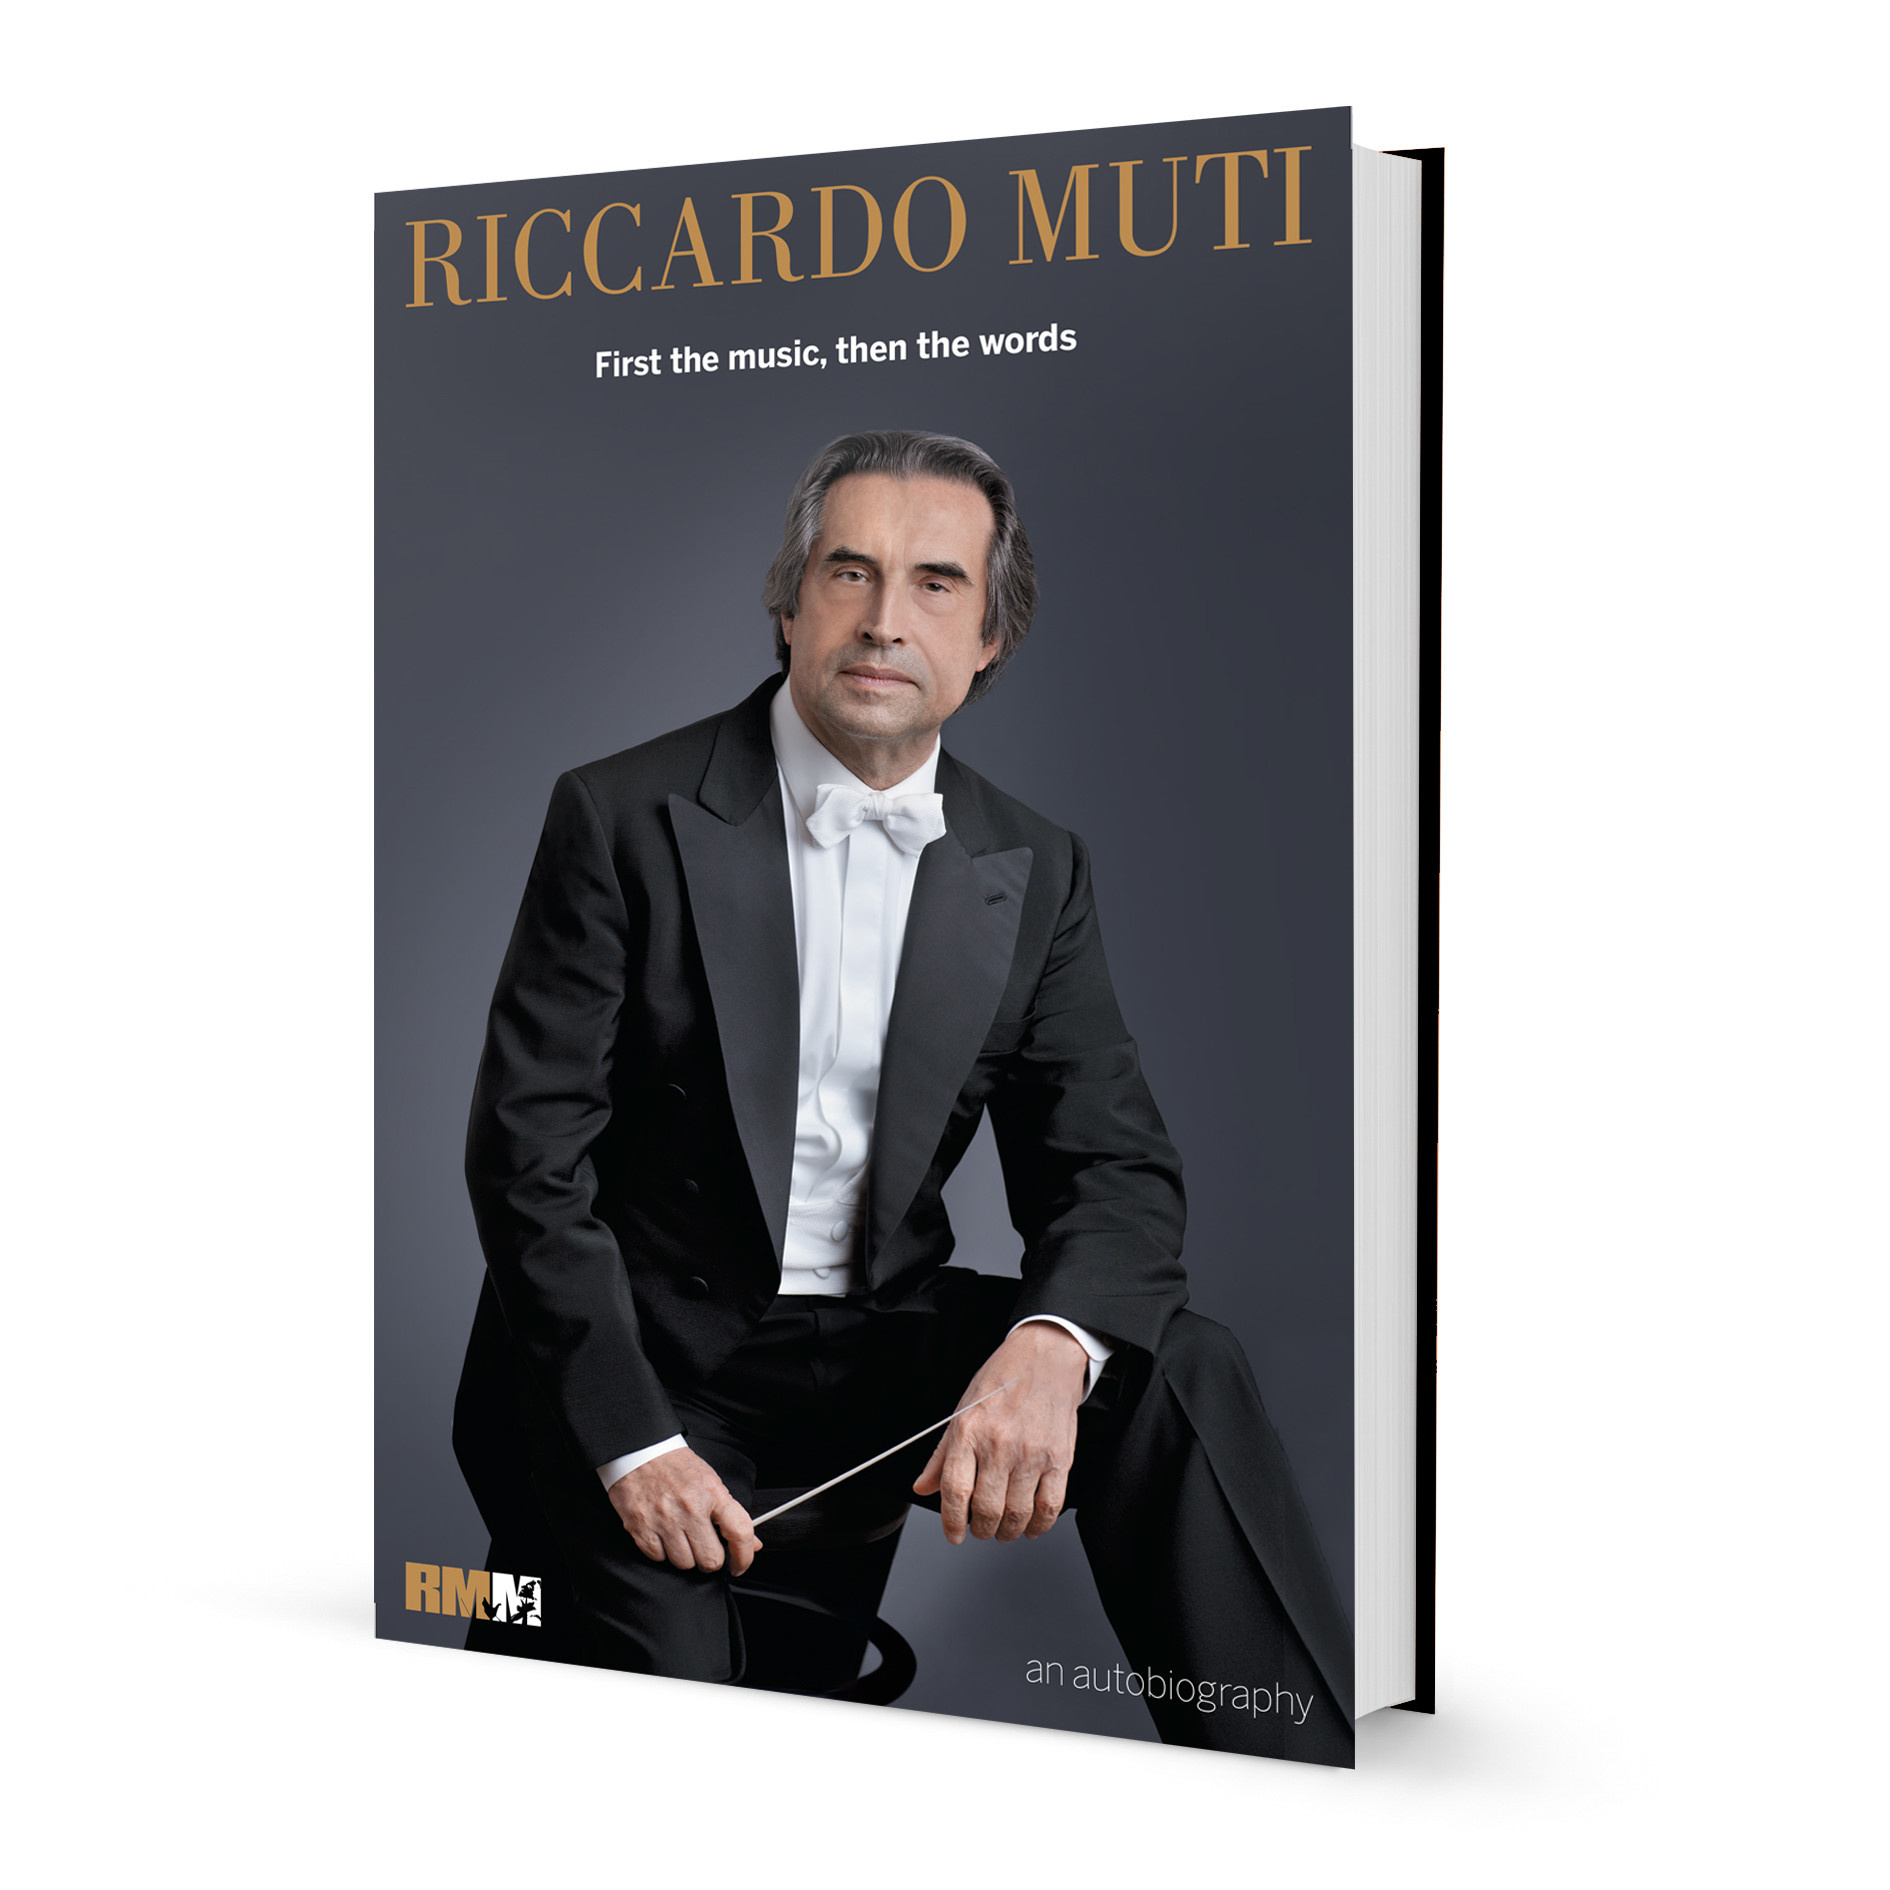 Symphony Store Book Riccardo Muti An Autobiography The Symphony Store